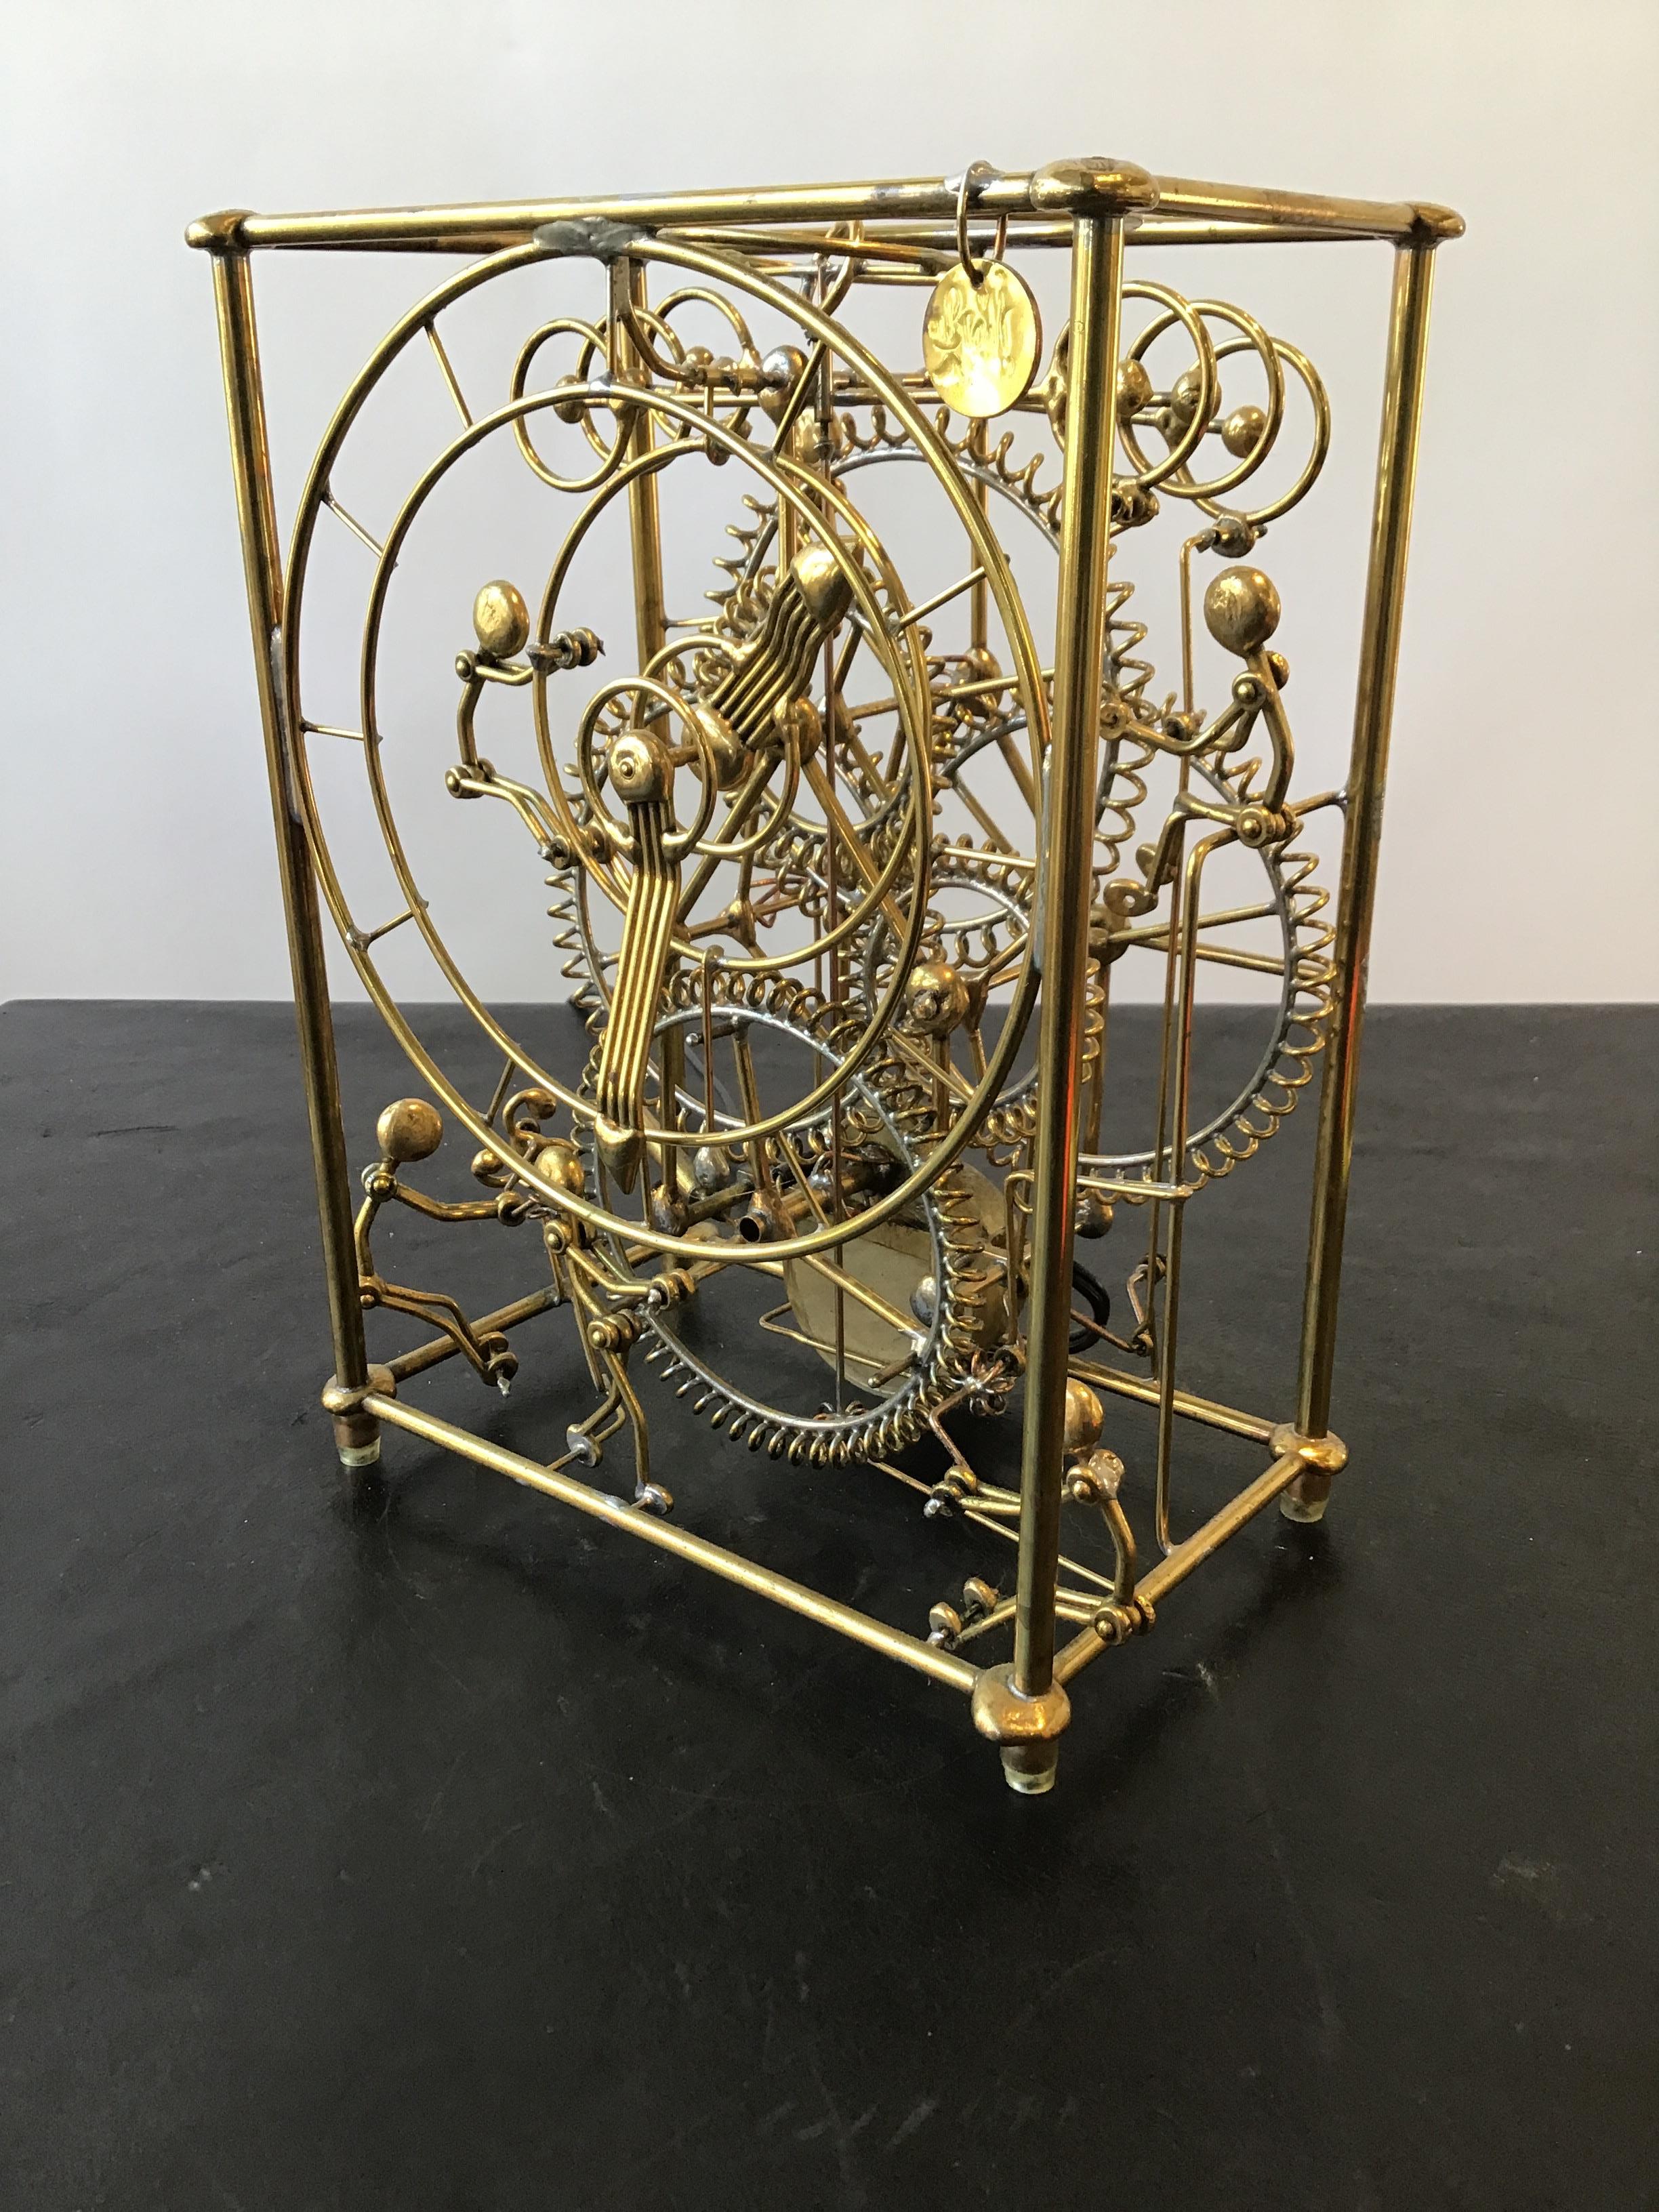 Six man kinetic solid brass clock by Gordon Bradt.